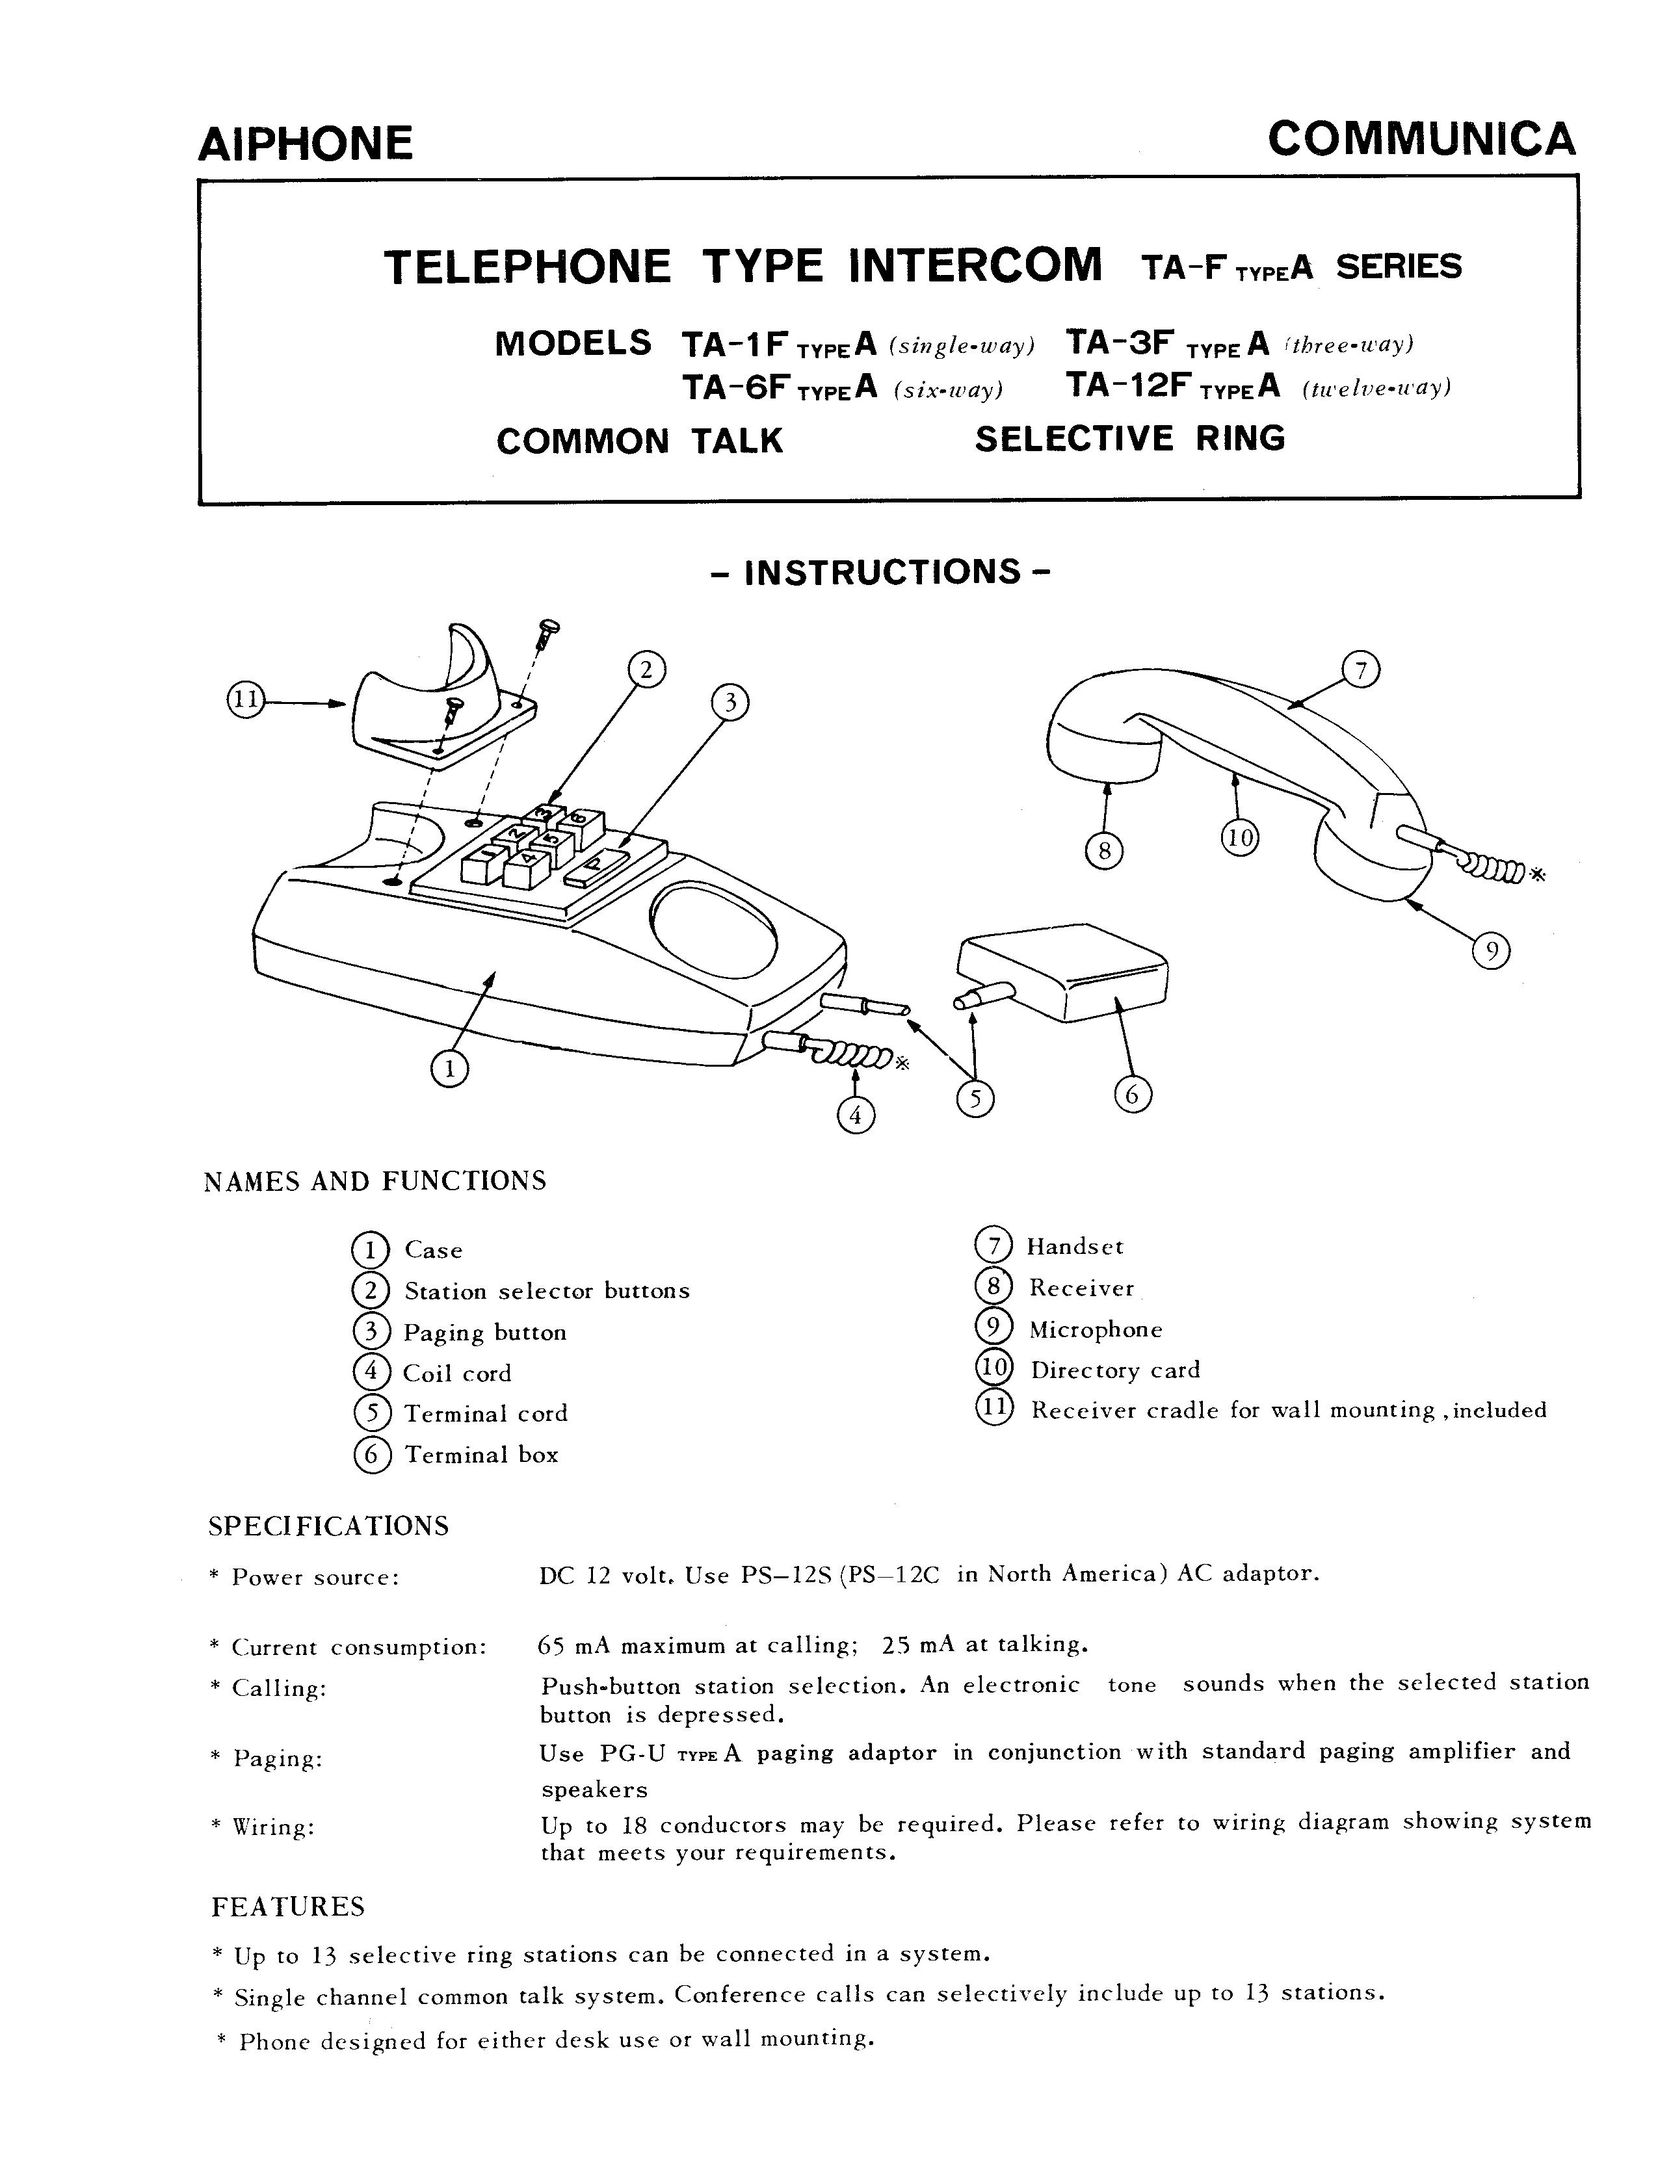 Aiphone TA-3F Telephone User Manual